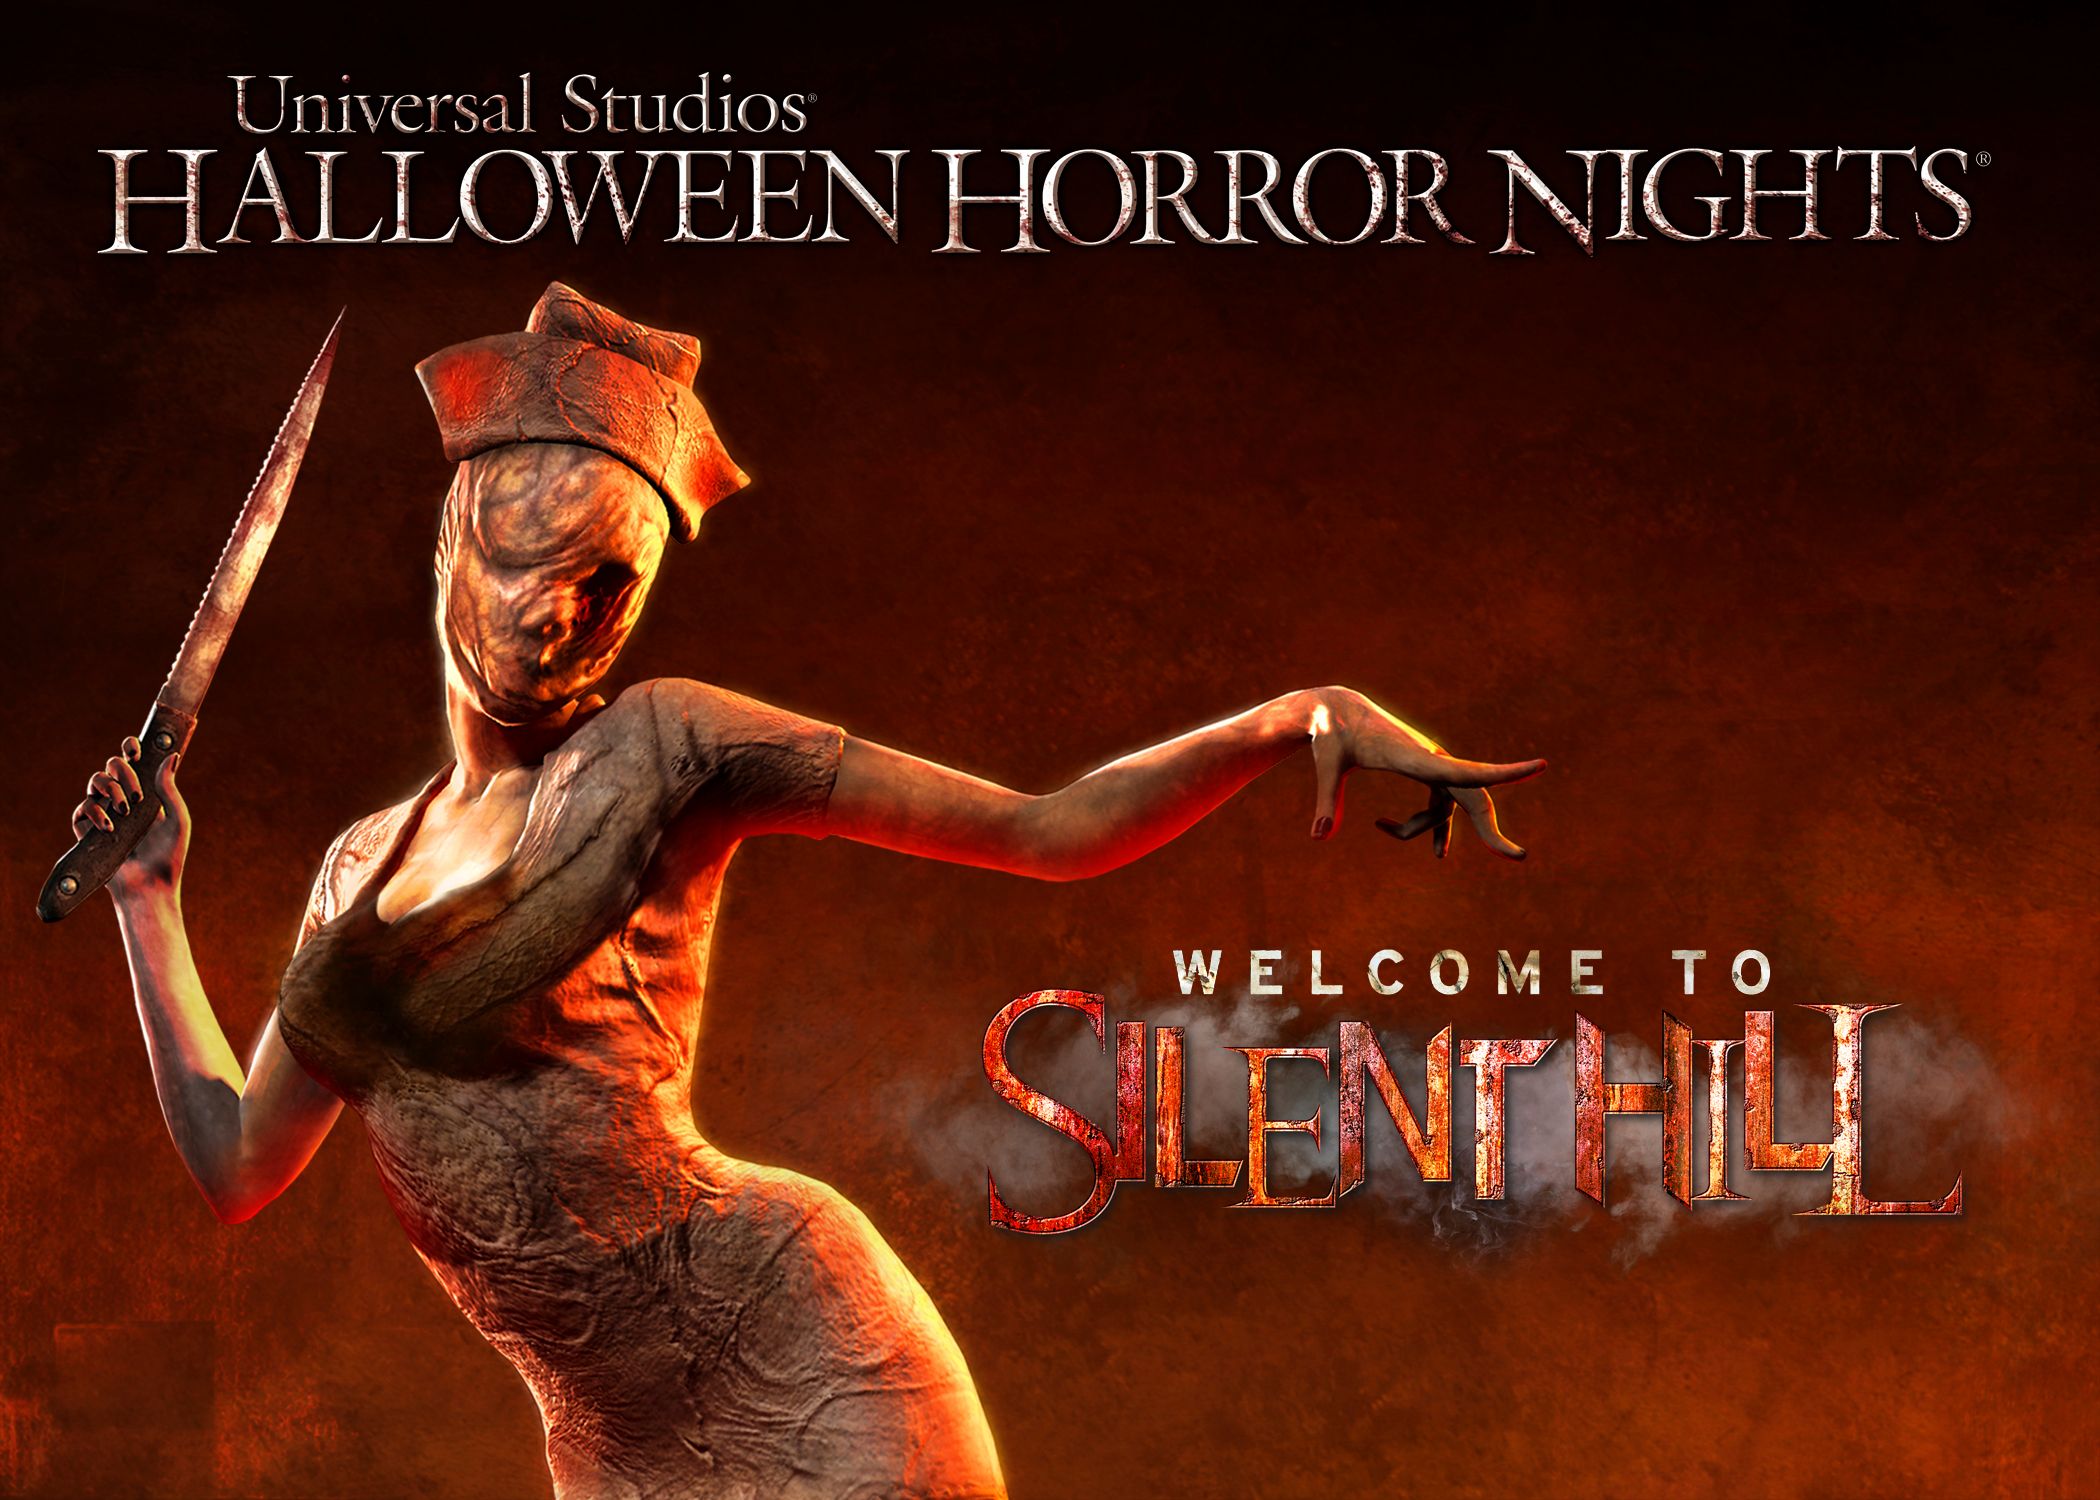 Silent Hill @ Universal Studios' Halloween Horror Nights #2